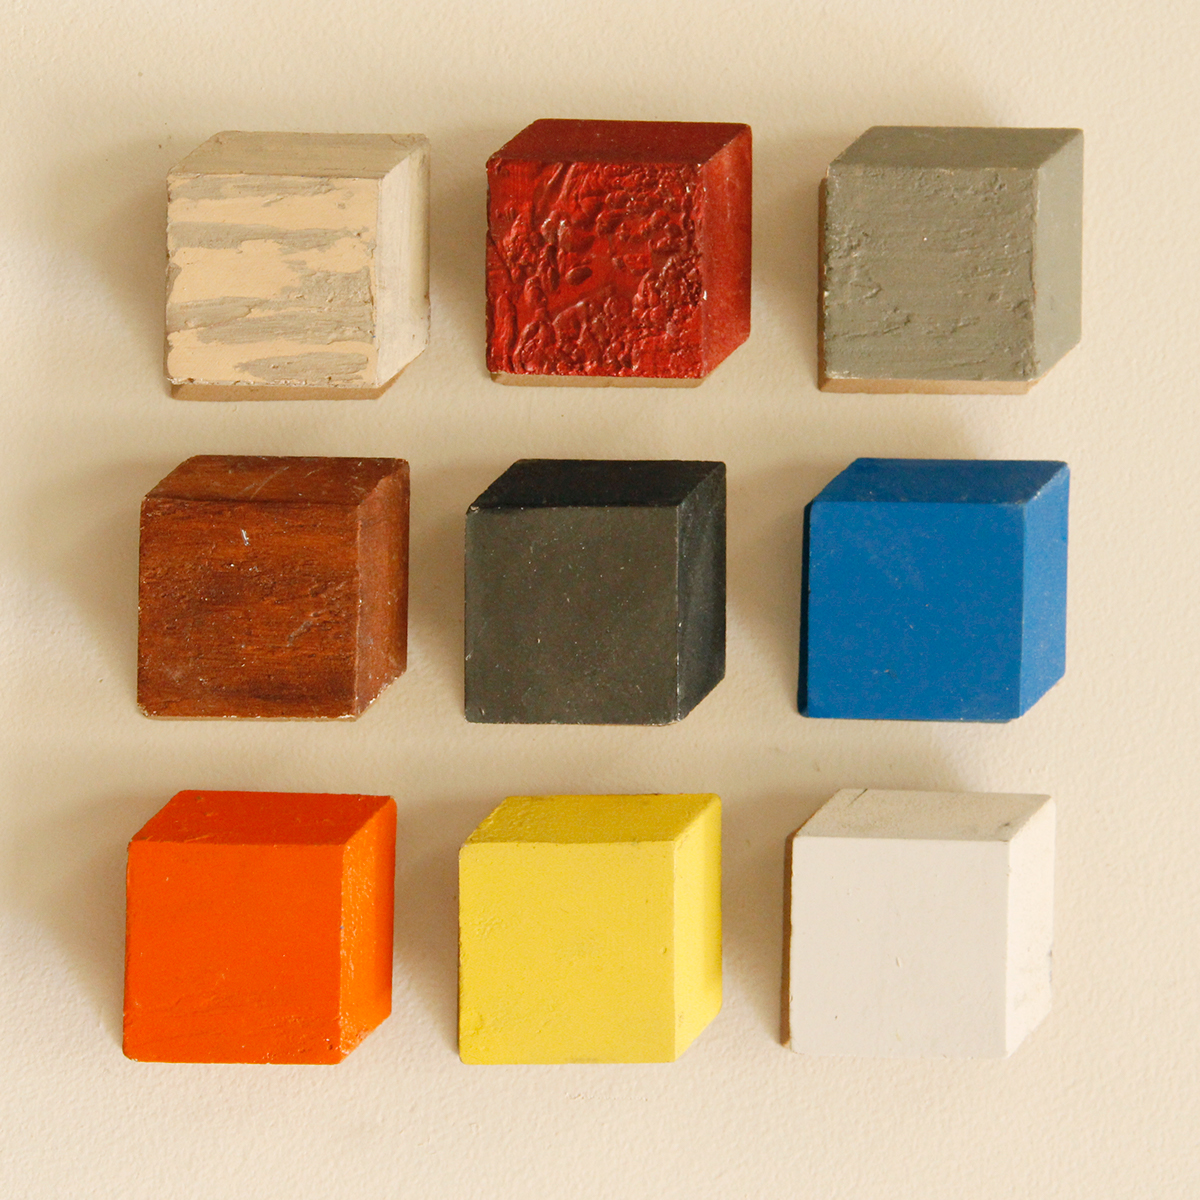 modular installation pixels texture archival squares cubes digital physical LEGO construction